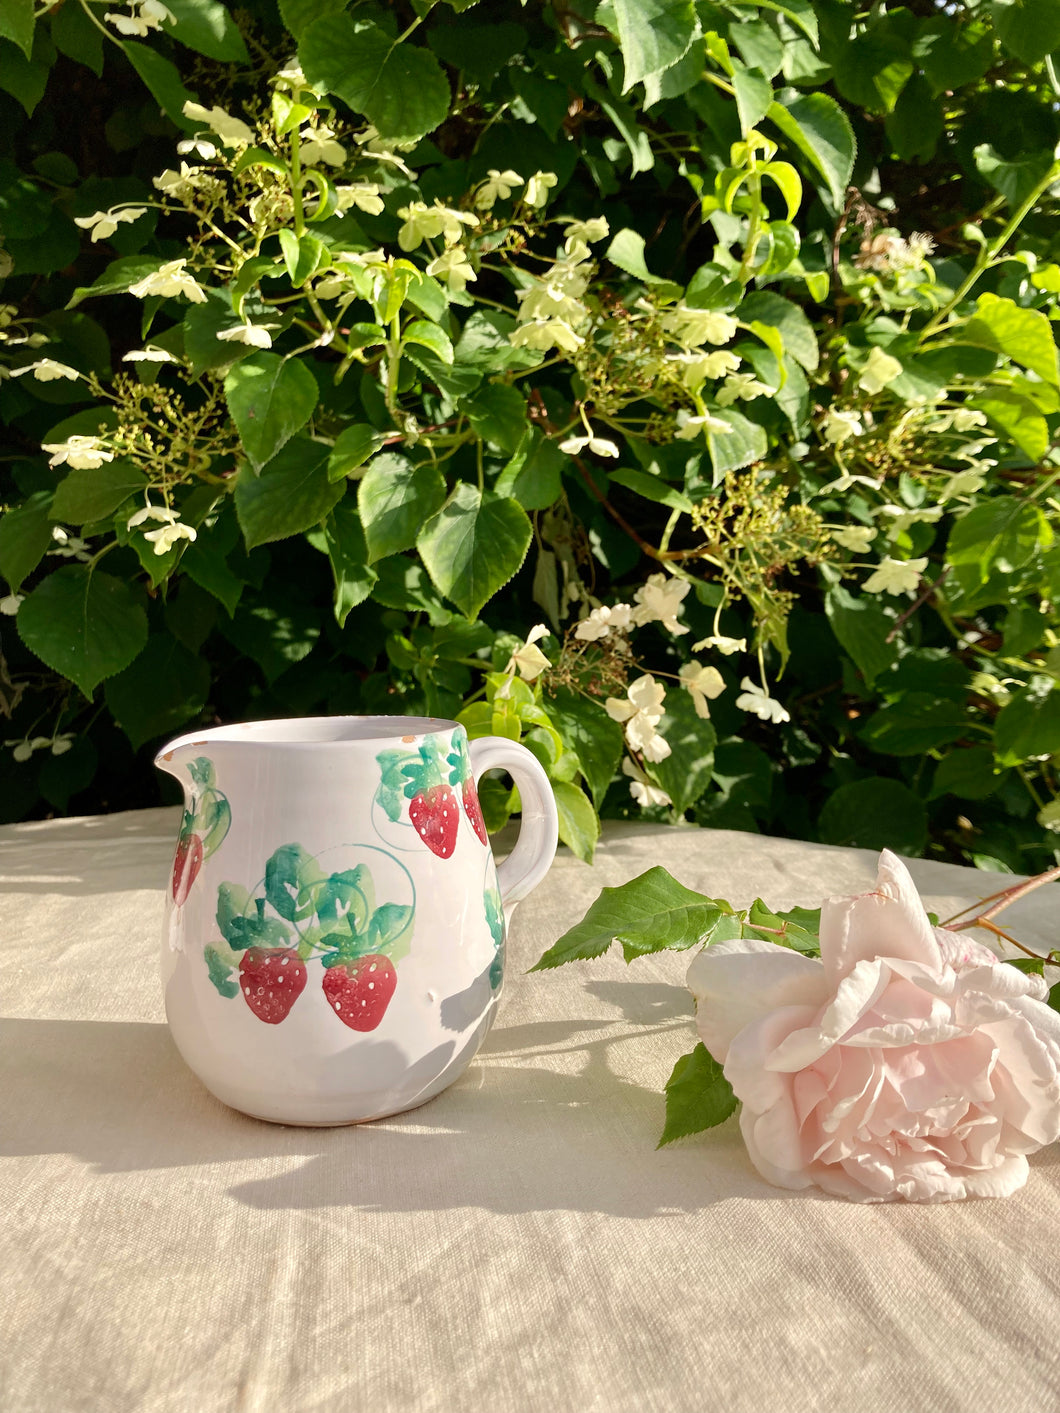 A sweet Italian strawberry jug